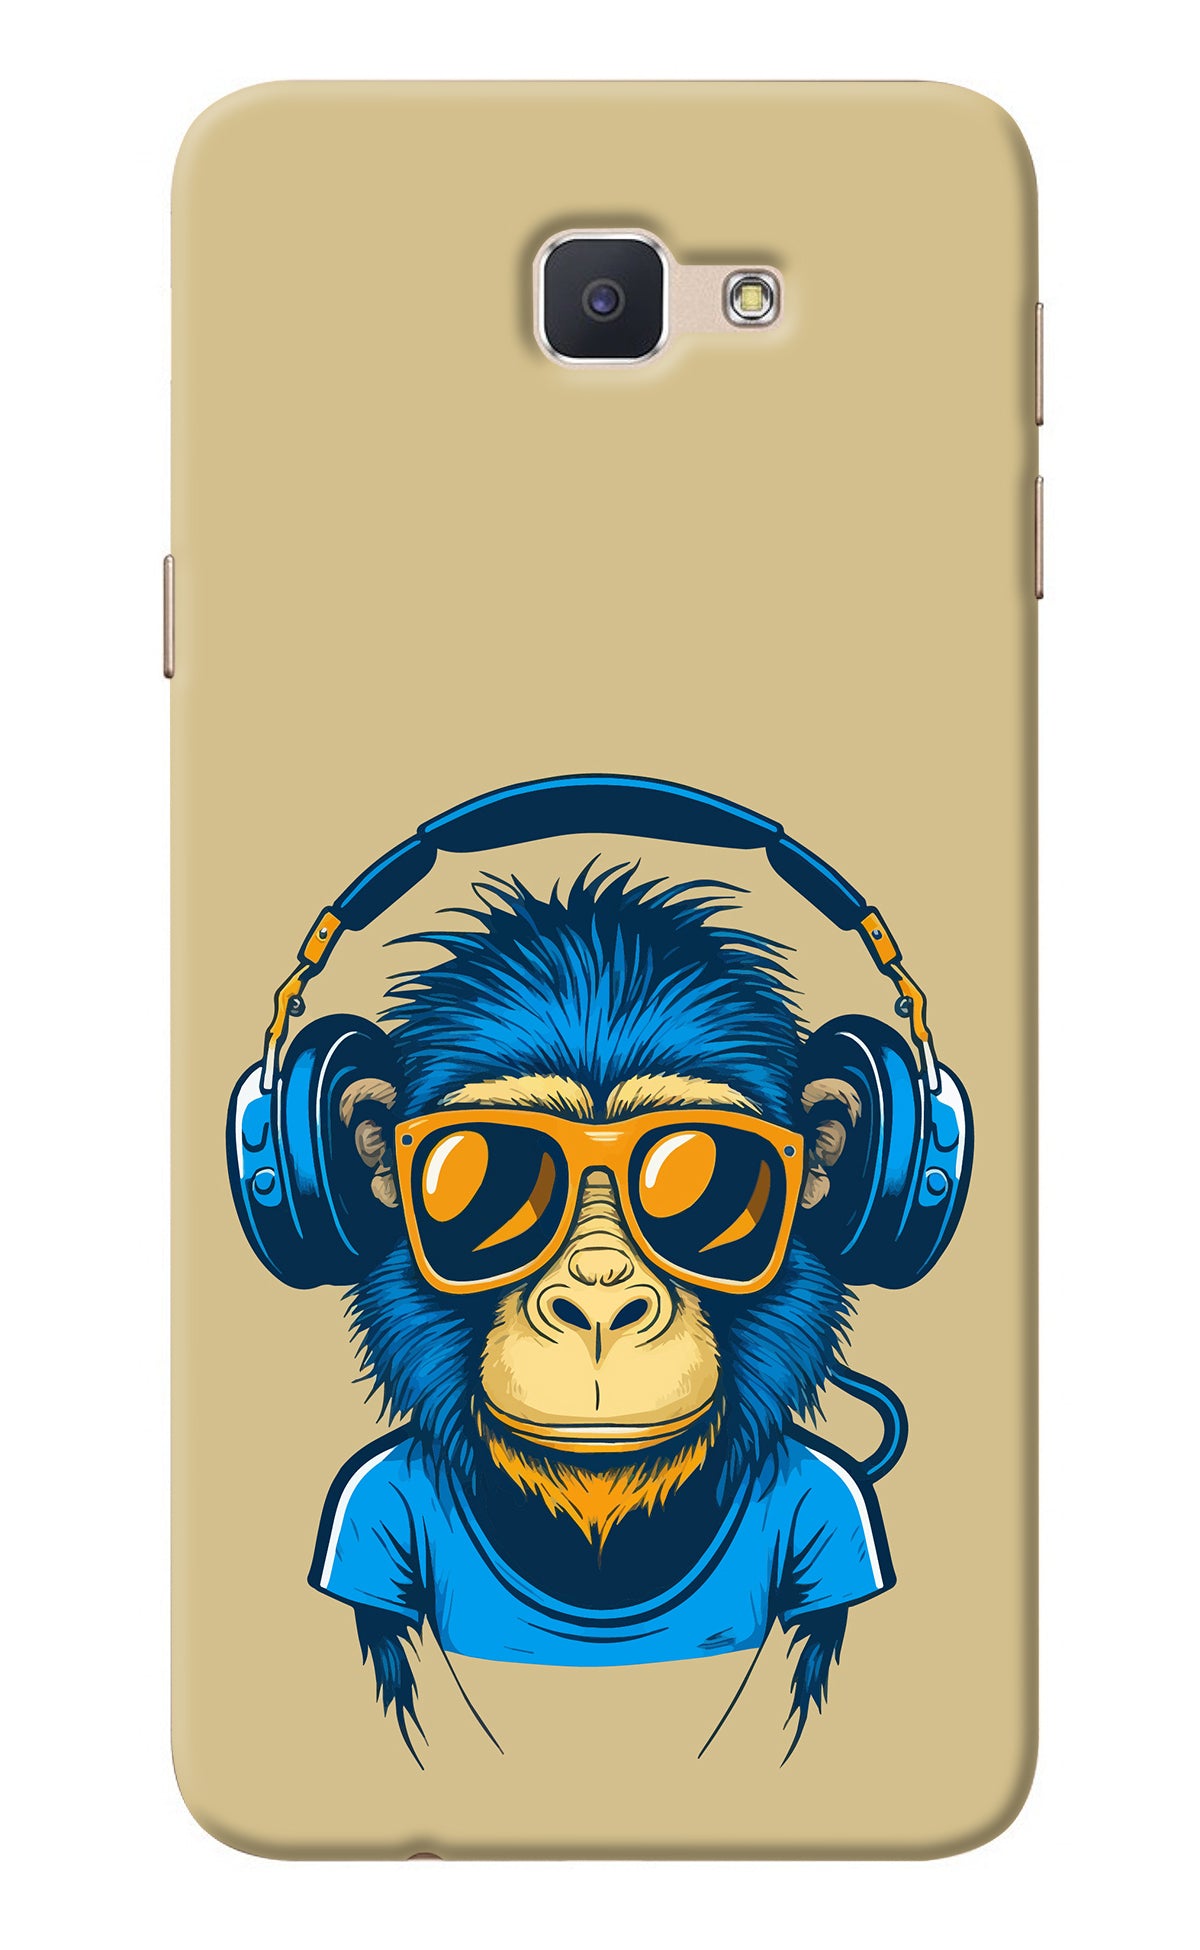 Monkey Headphone Samsung J7 Prime Back Cover